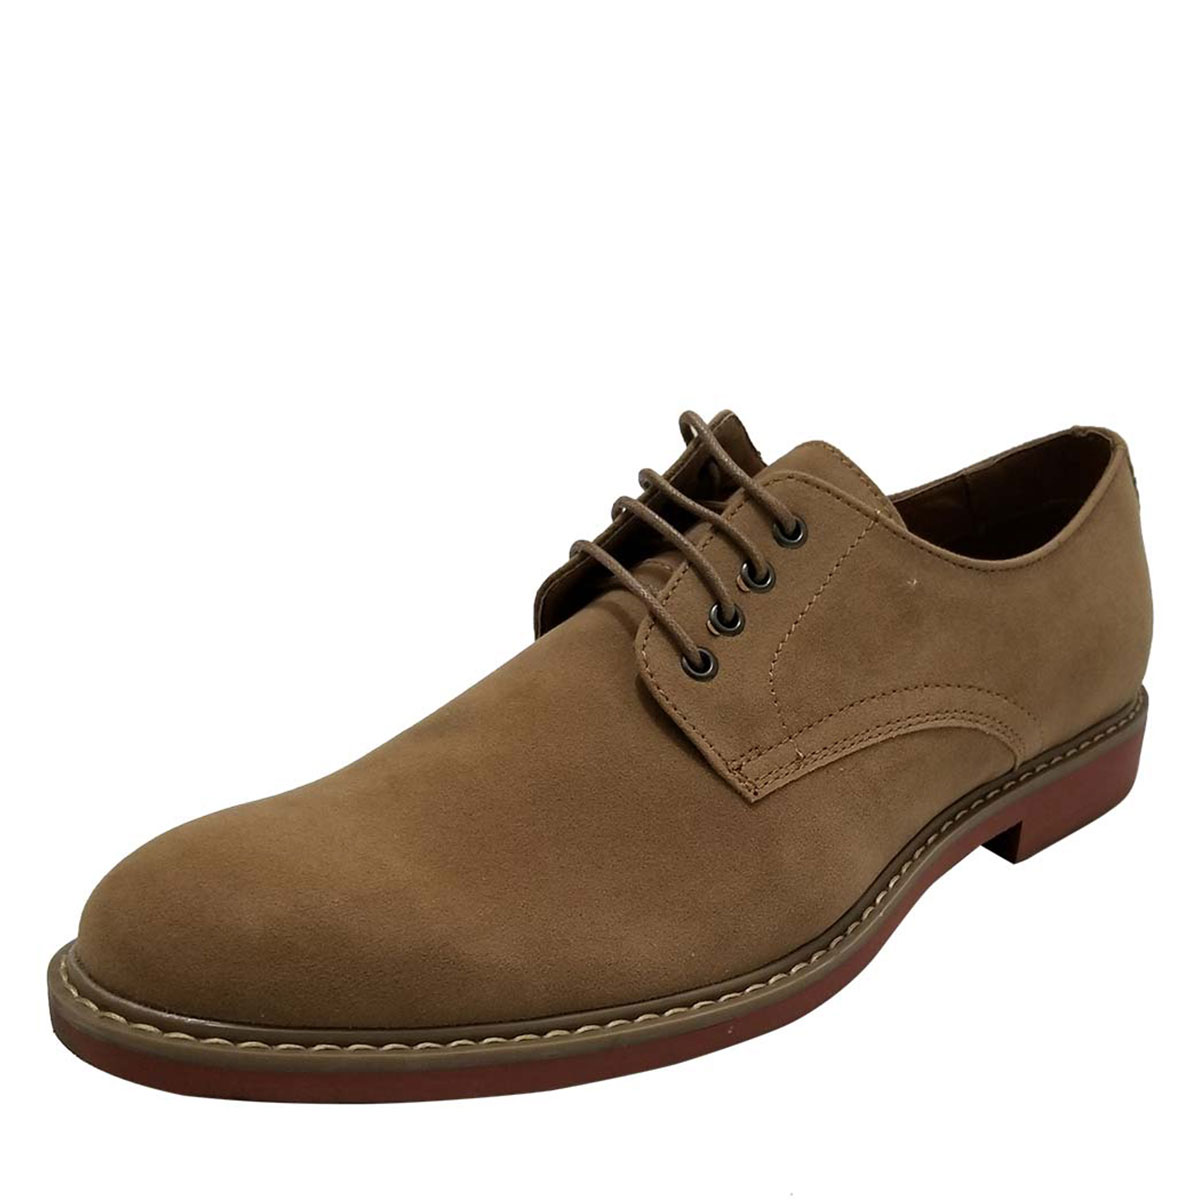 Salvatore Ferragamo Men's Daniel Oxford Shoes, Size 9.5